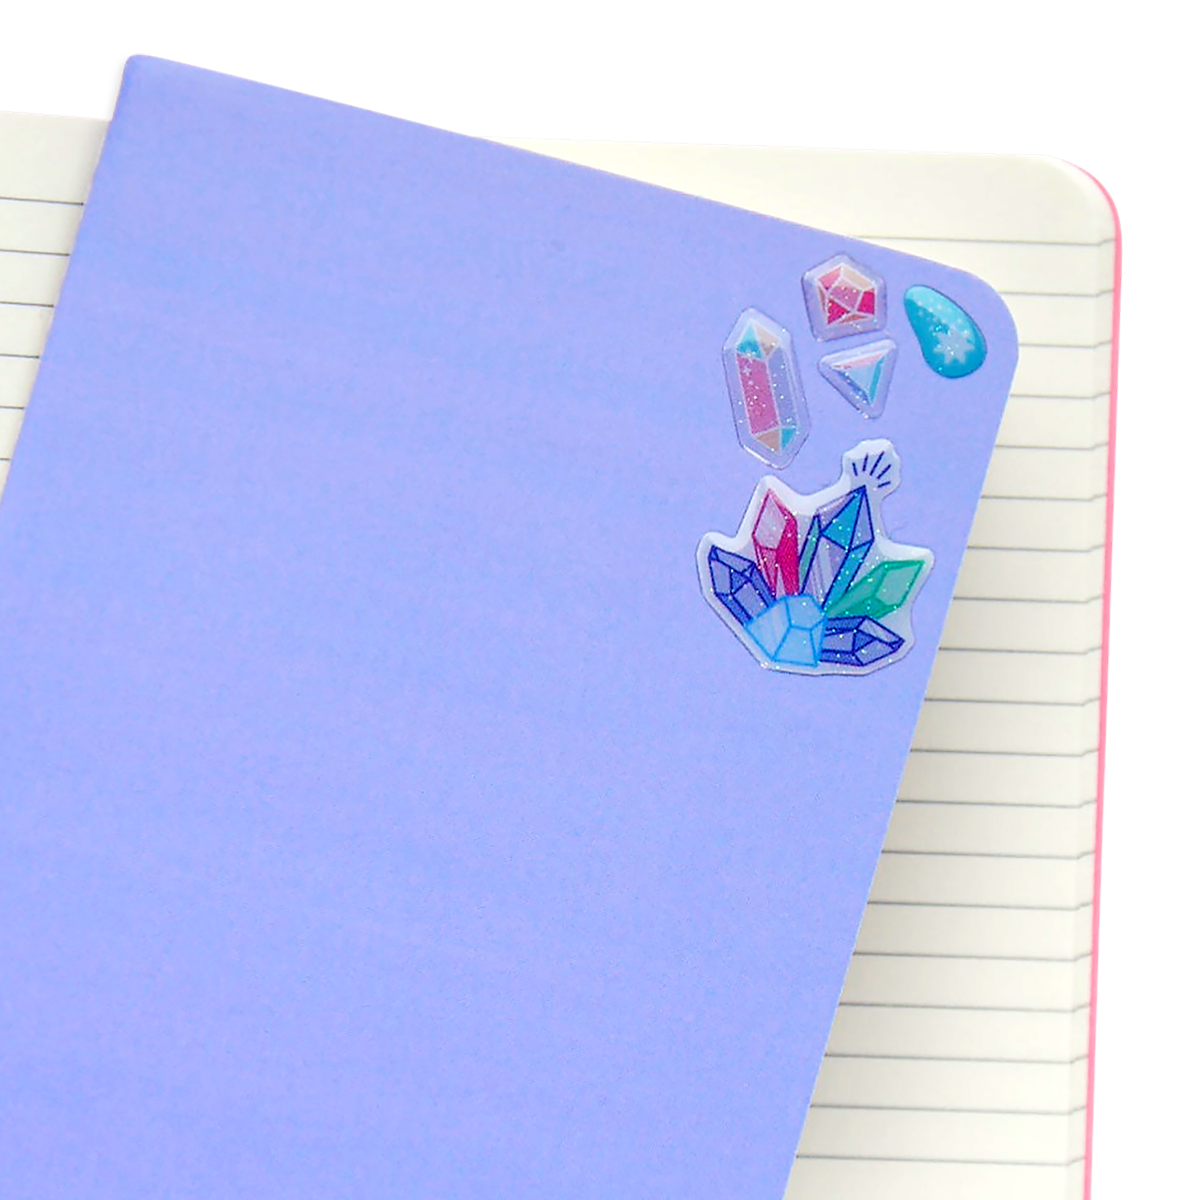 Stickiville Glitter Gem stickers on note pad